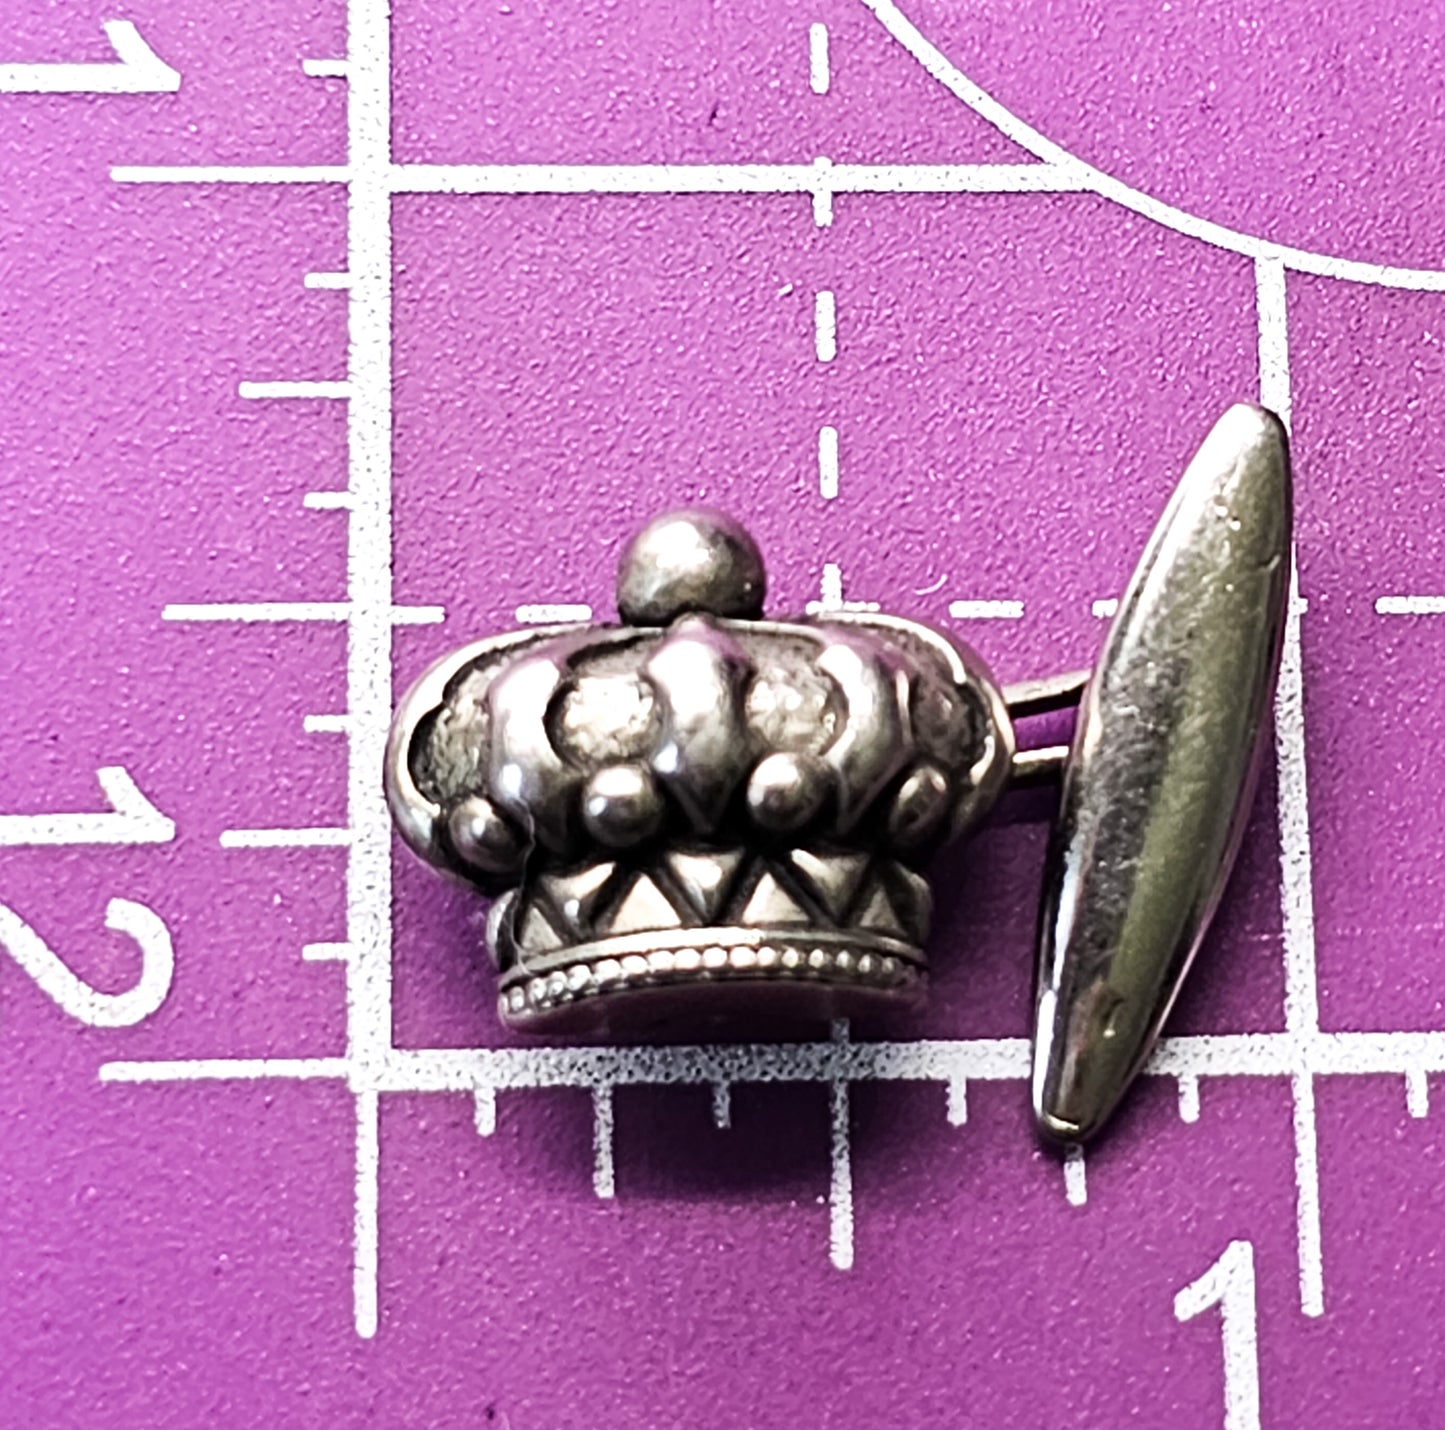 Heraldic crown royal confirmation vintage sterling silver cufflinks